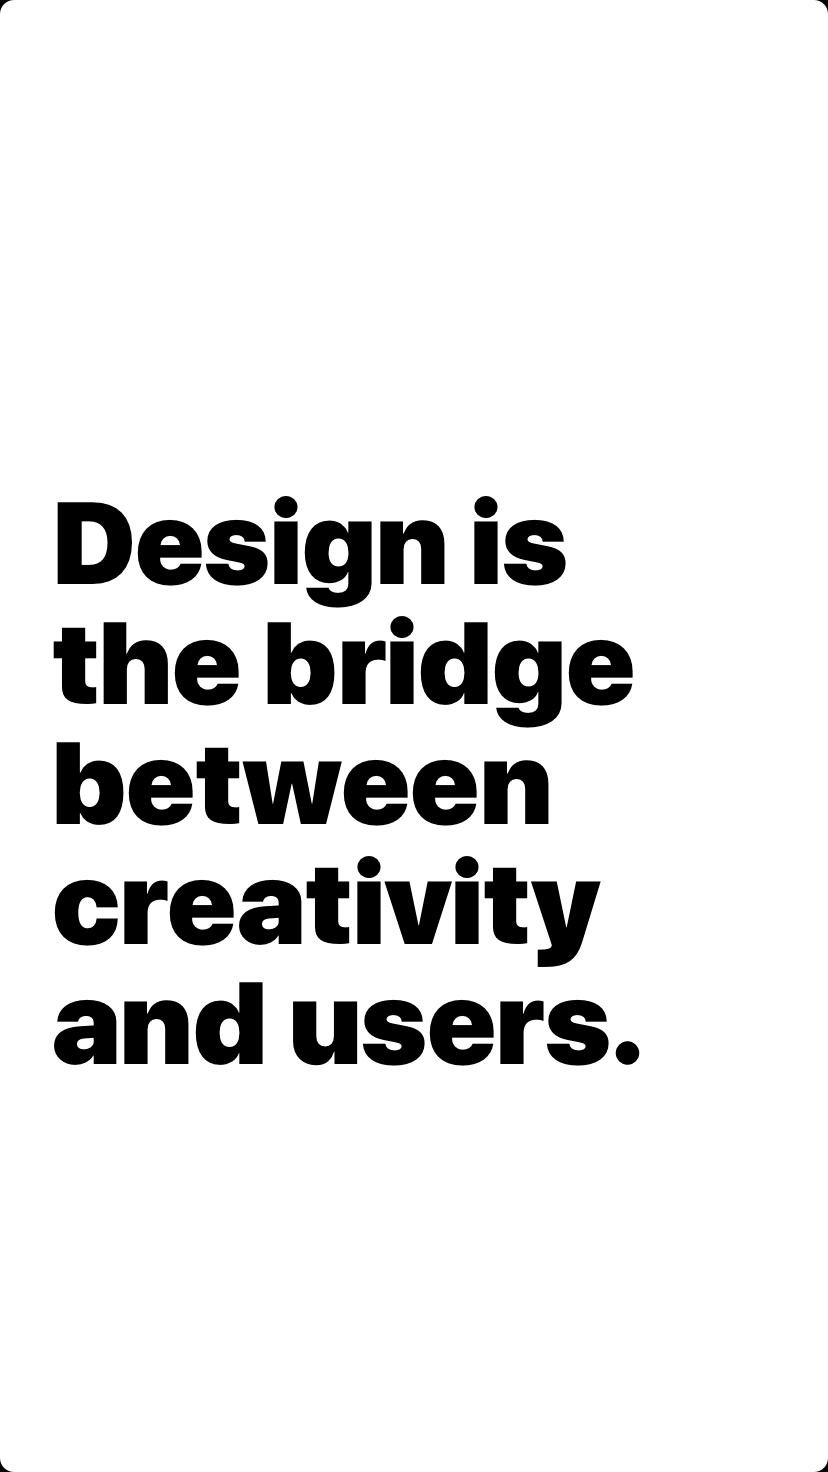 Design is the bridge between creativity and users.